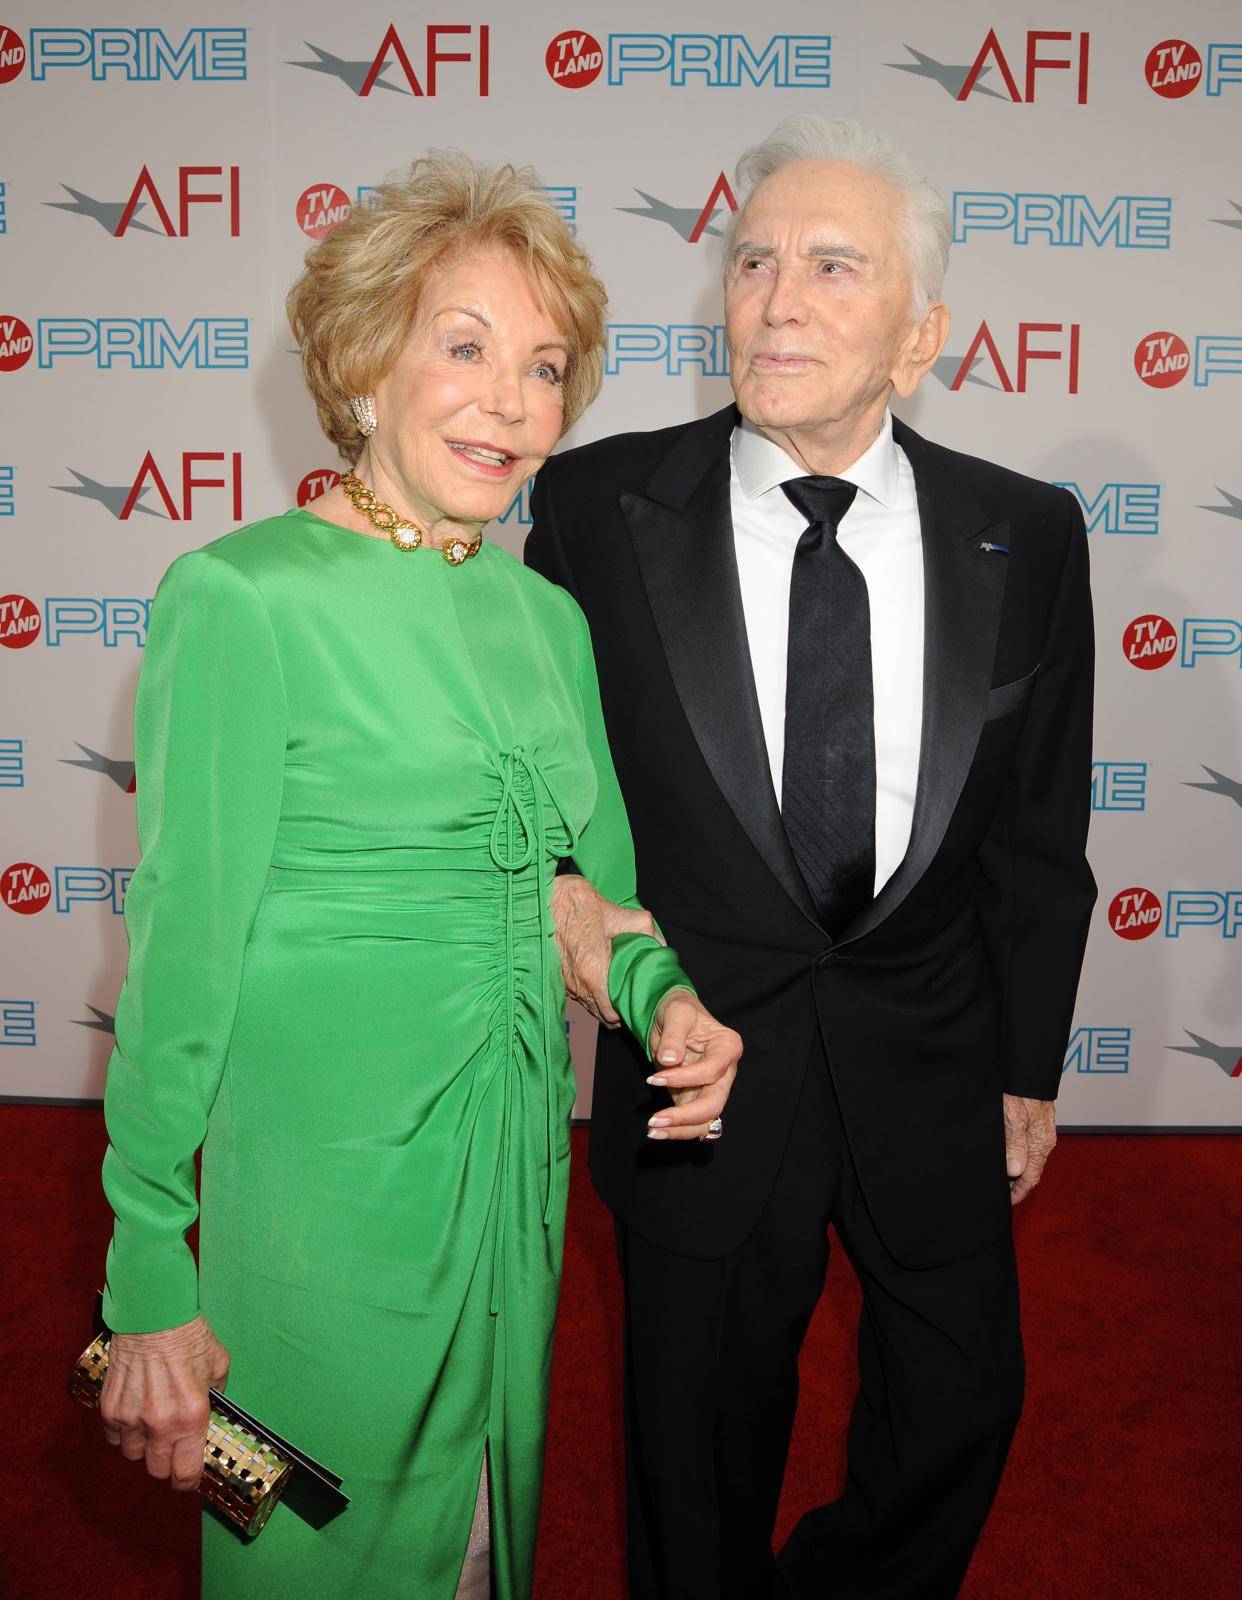 37th AFI Life Achievement Award: A Tribute to Michael Douglas - LA